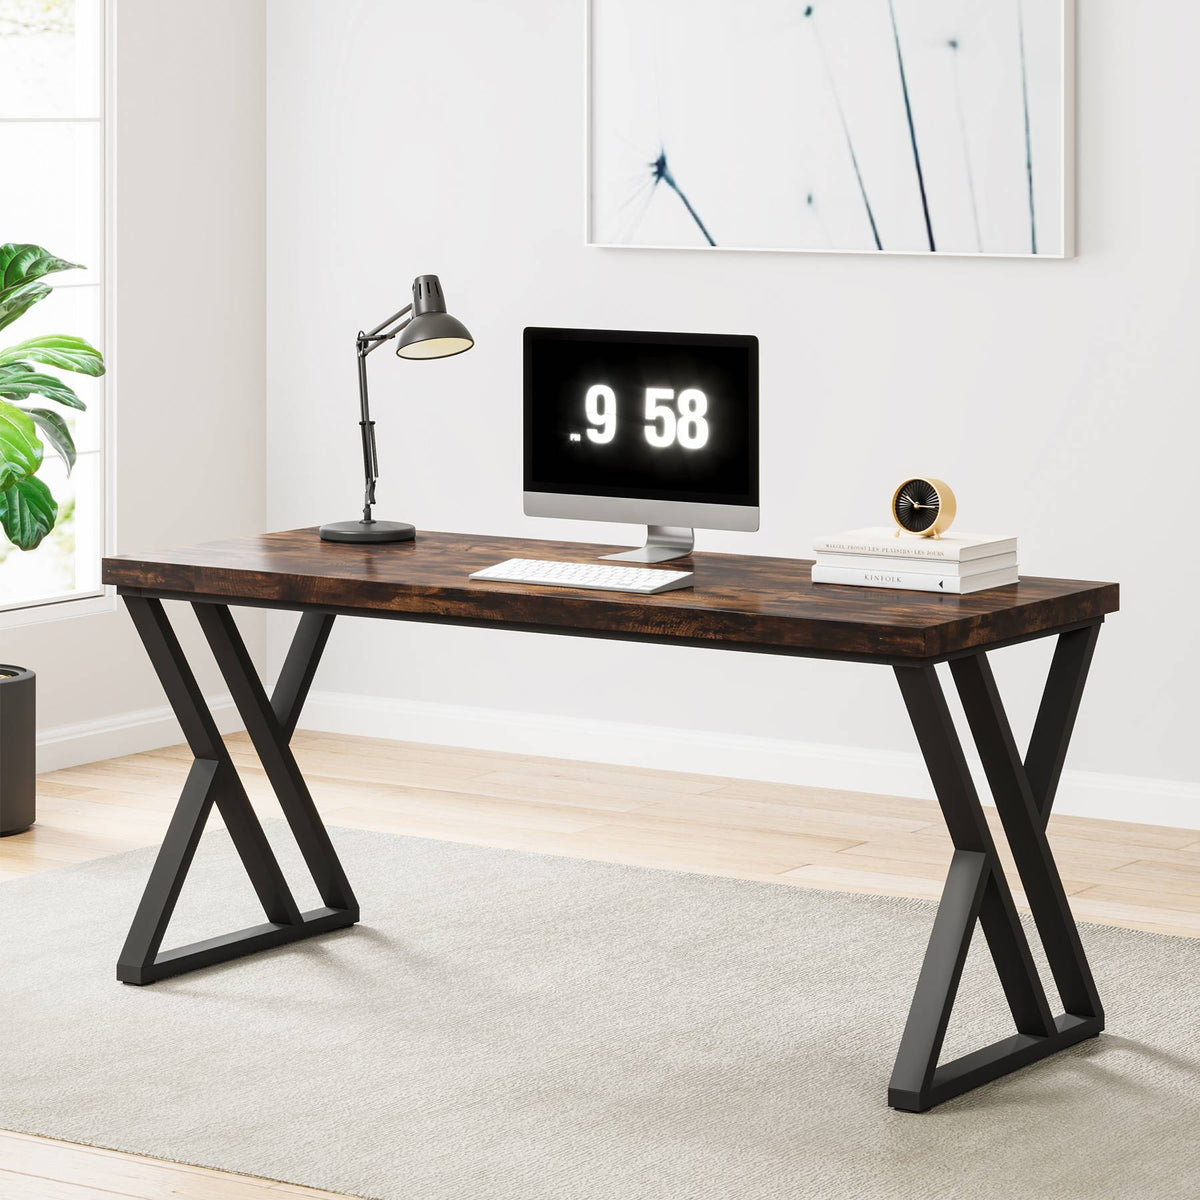 Rustic Desk With X Frame Legs Computer Desk Industrial Desk